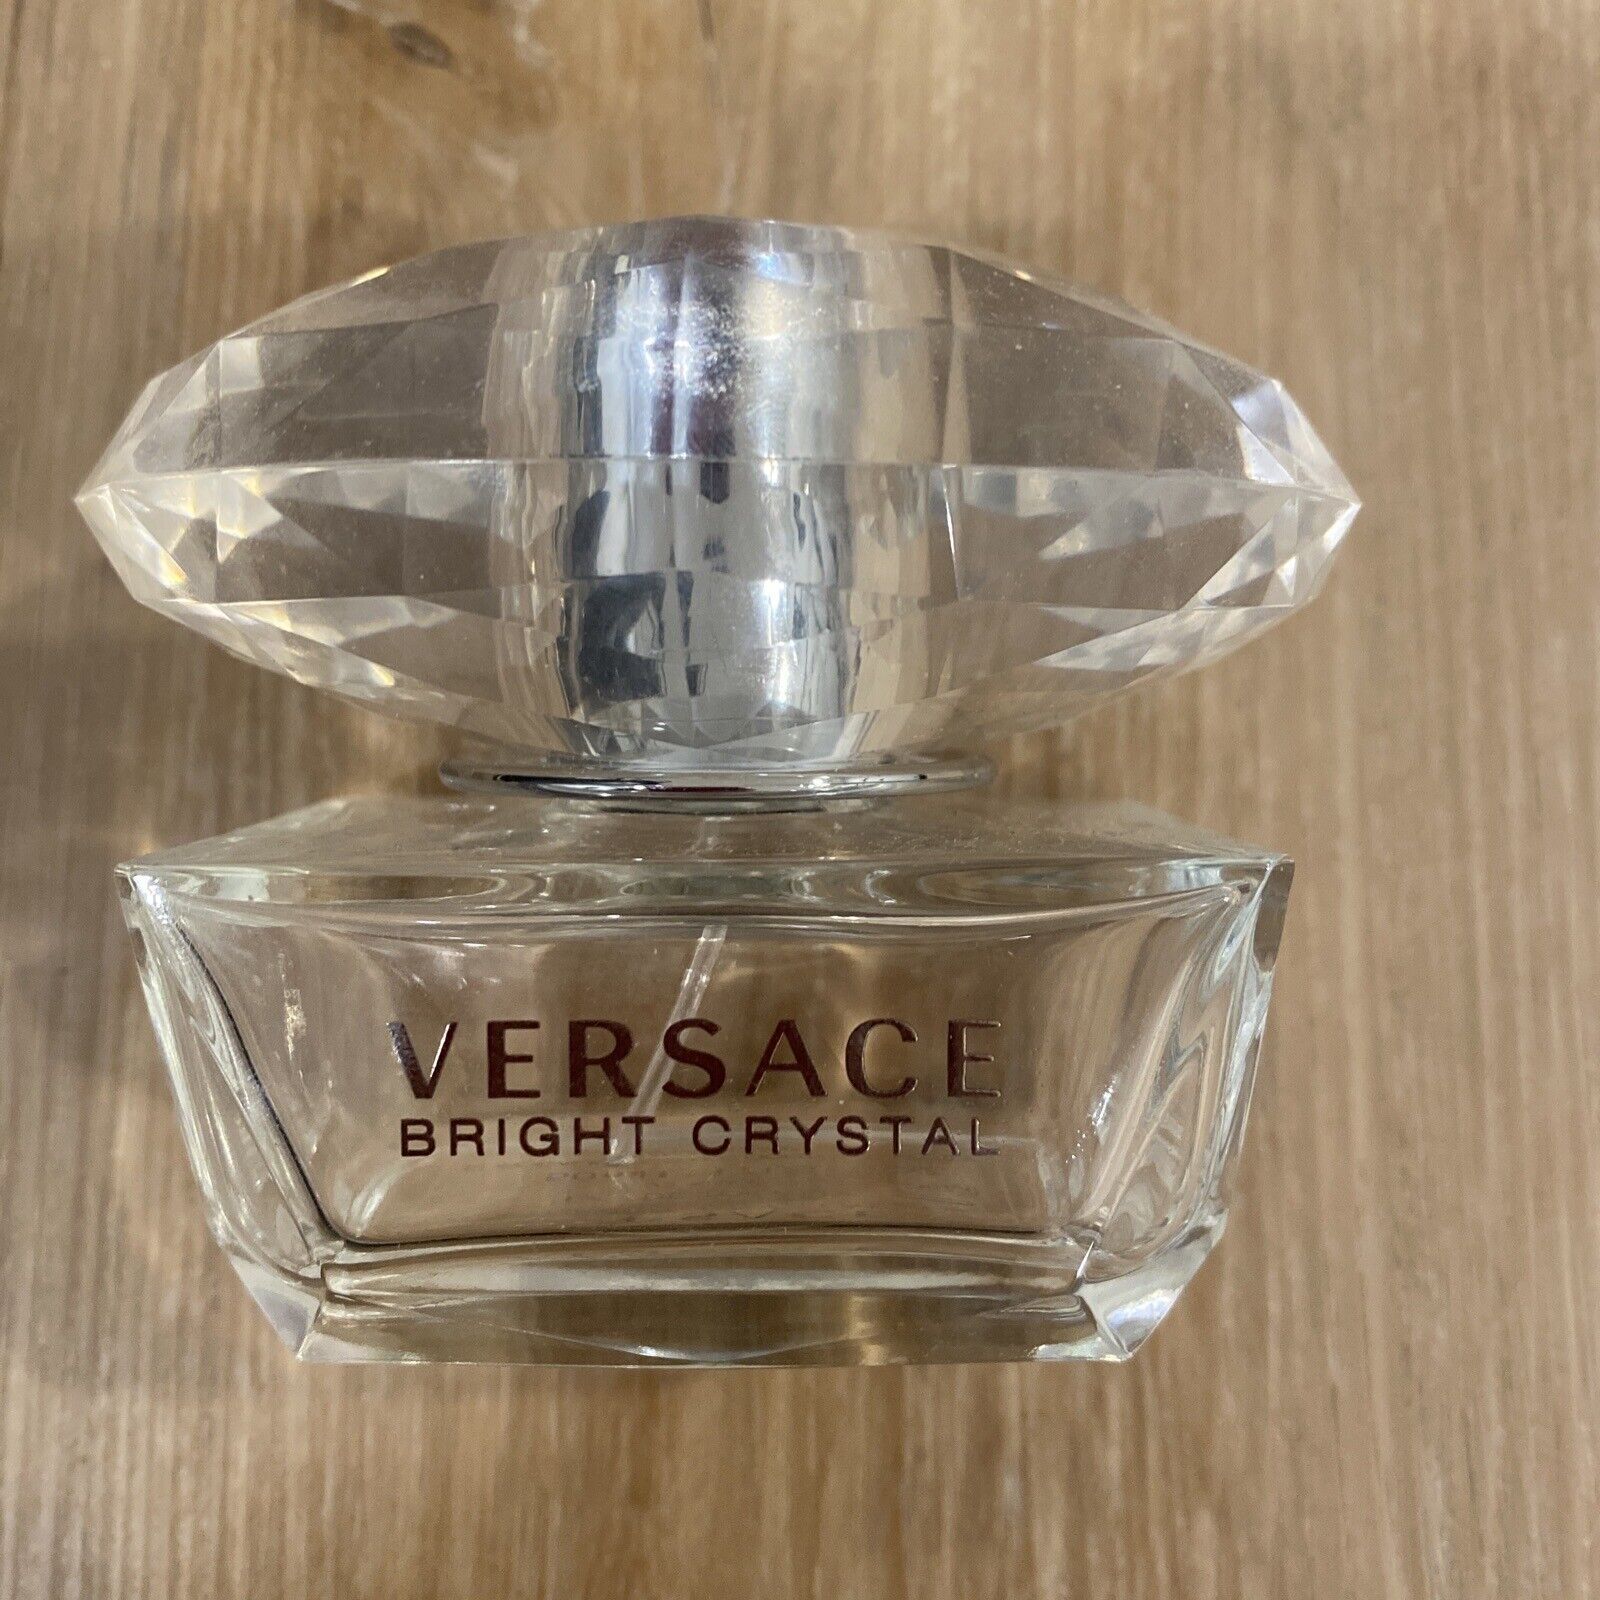 Versace Bright Crystal Perfume 50 ml 1.7 oz Empty Bottle Eau De Toilette Italy